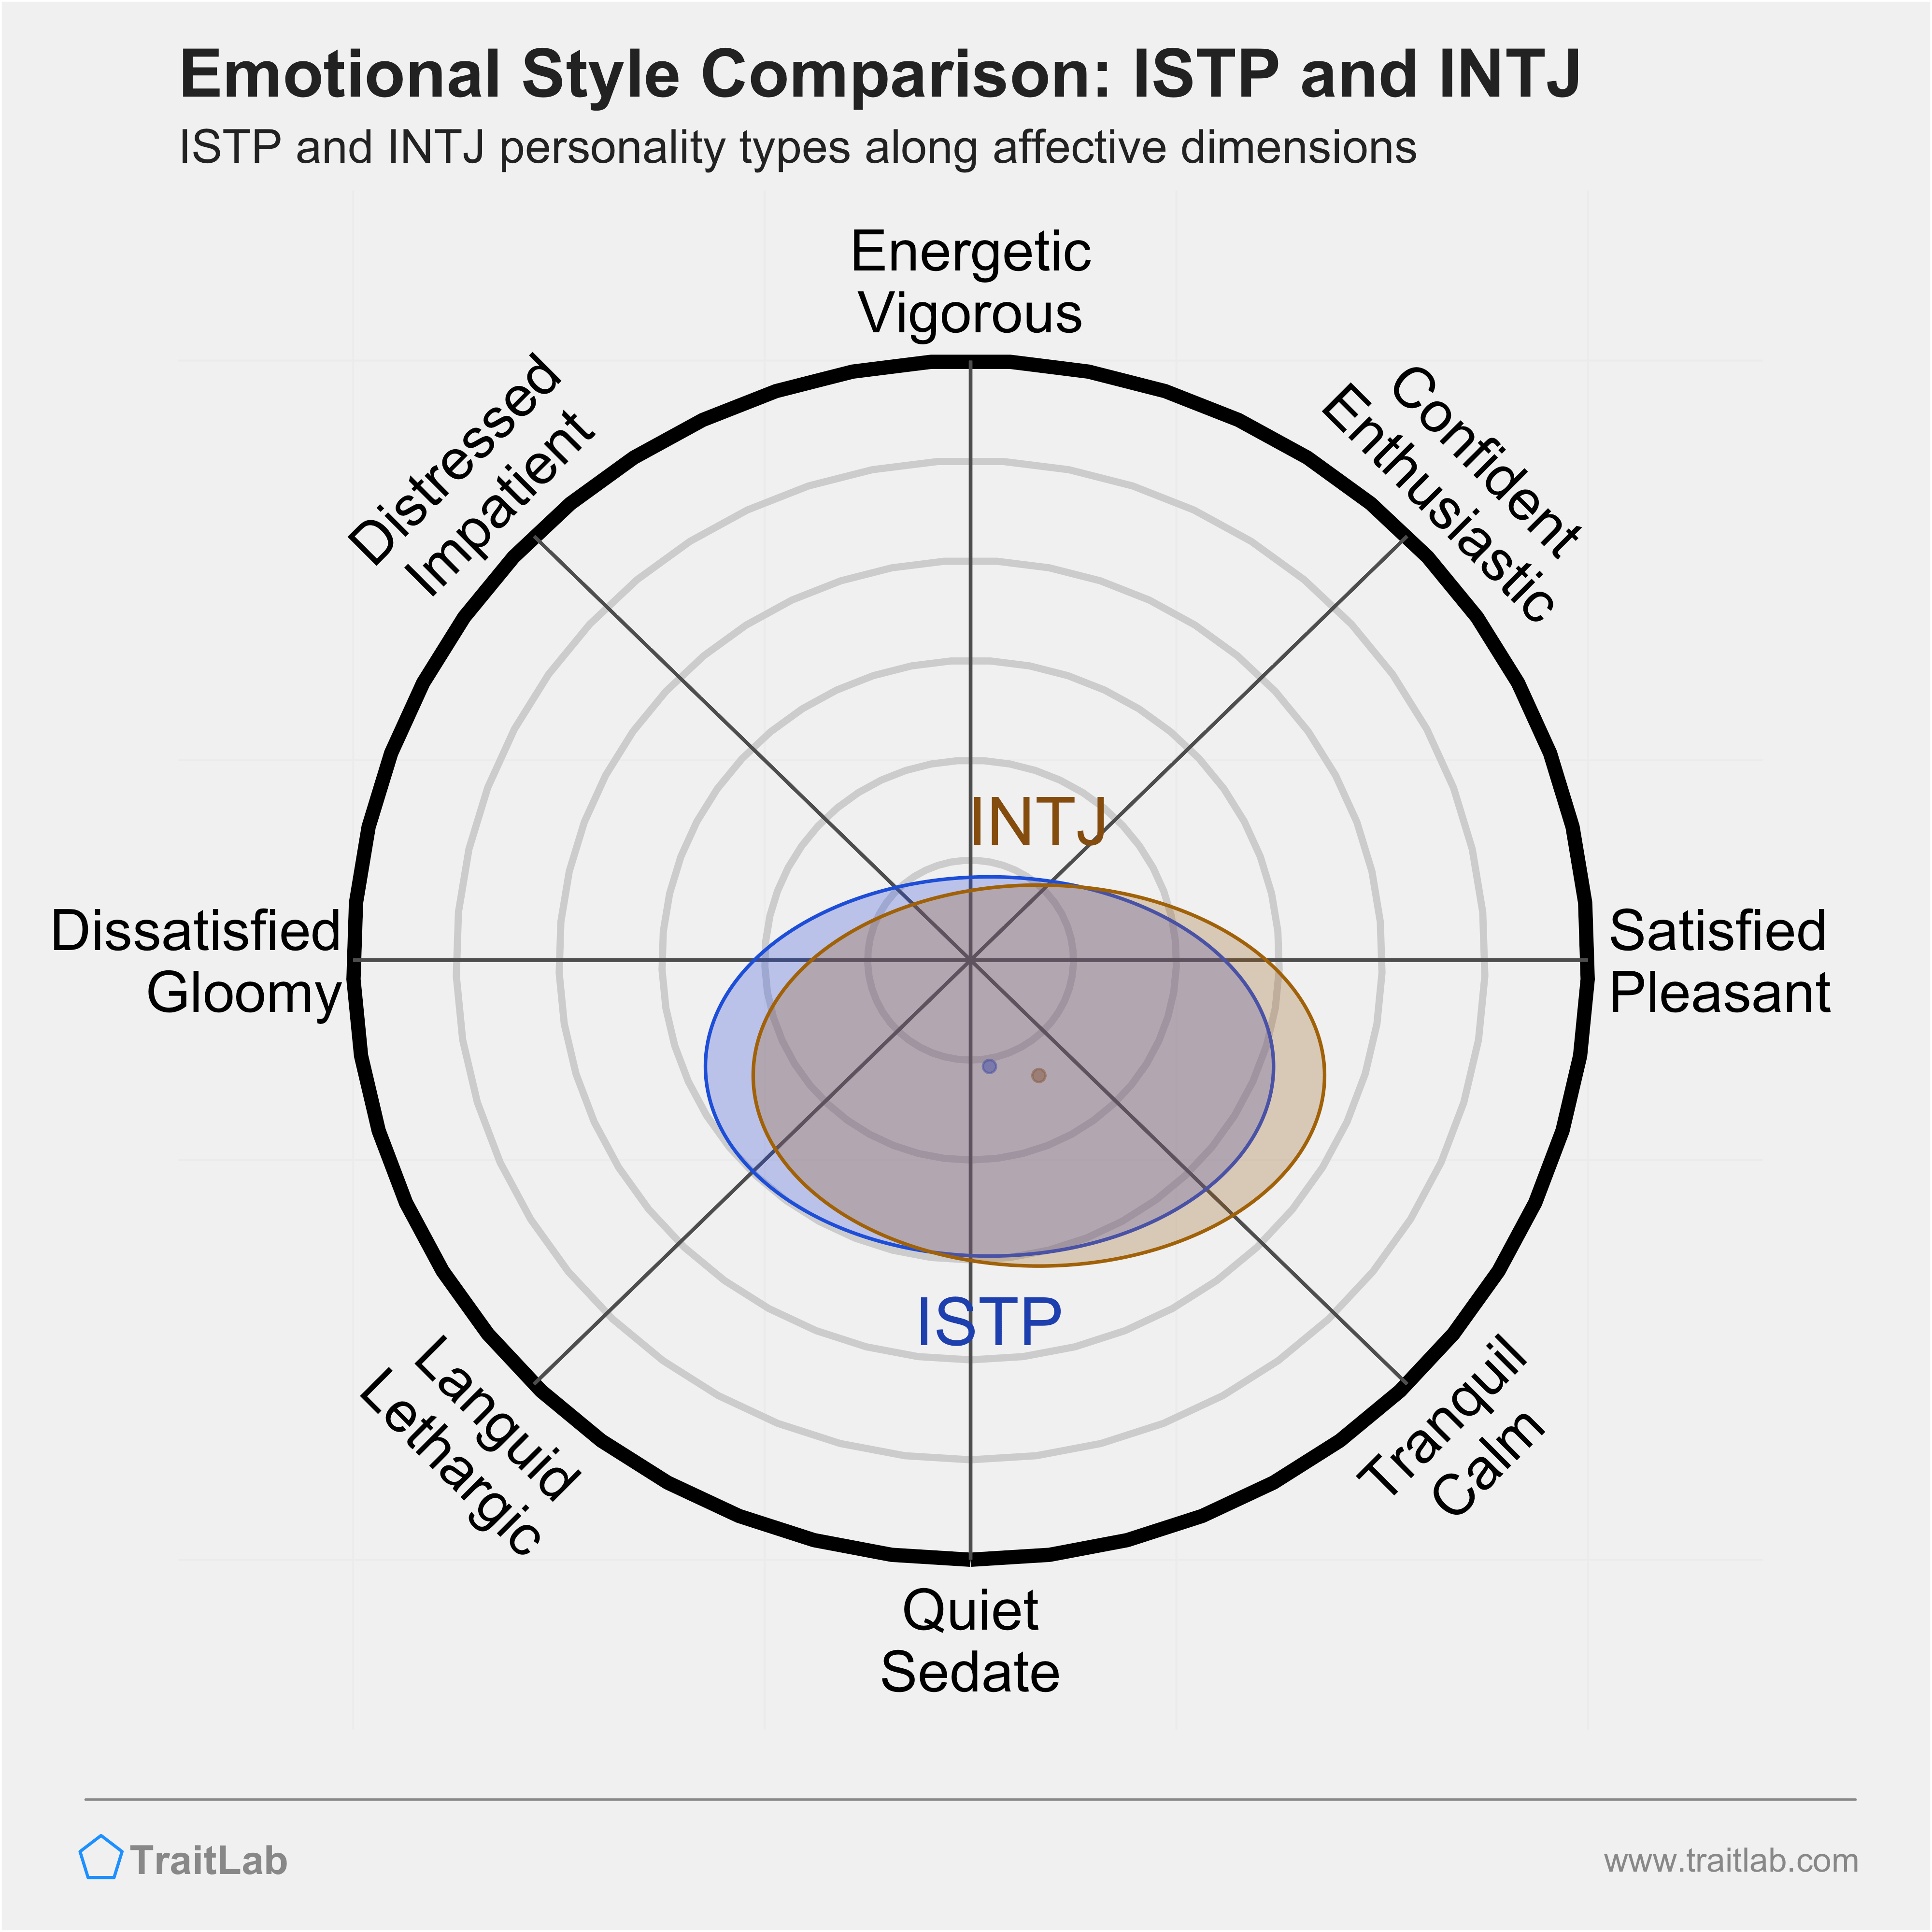 ISTP and INTJ comparison across emotional (affective) dimensions